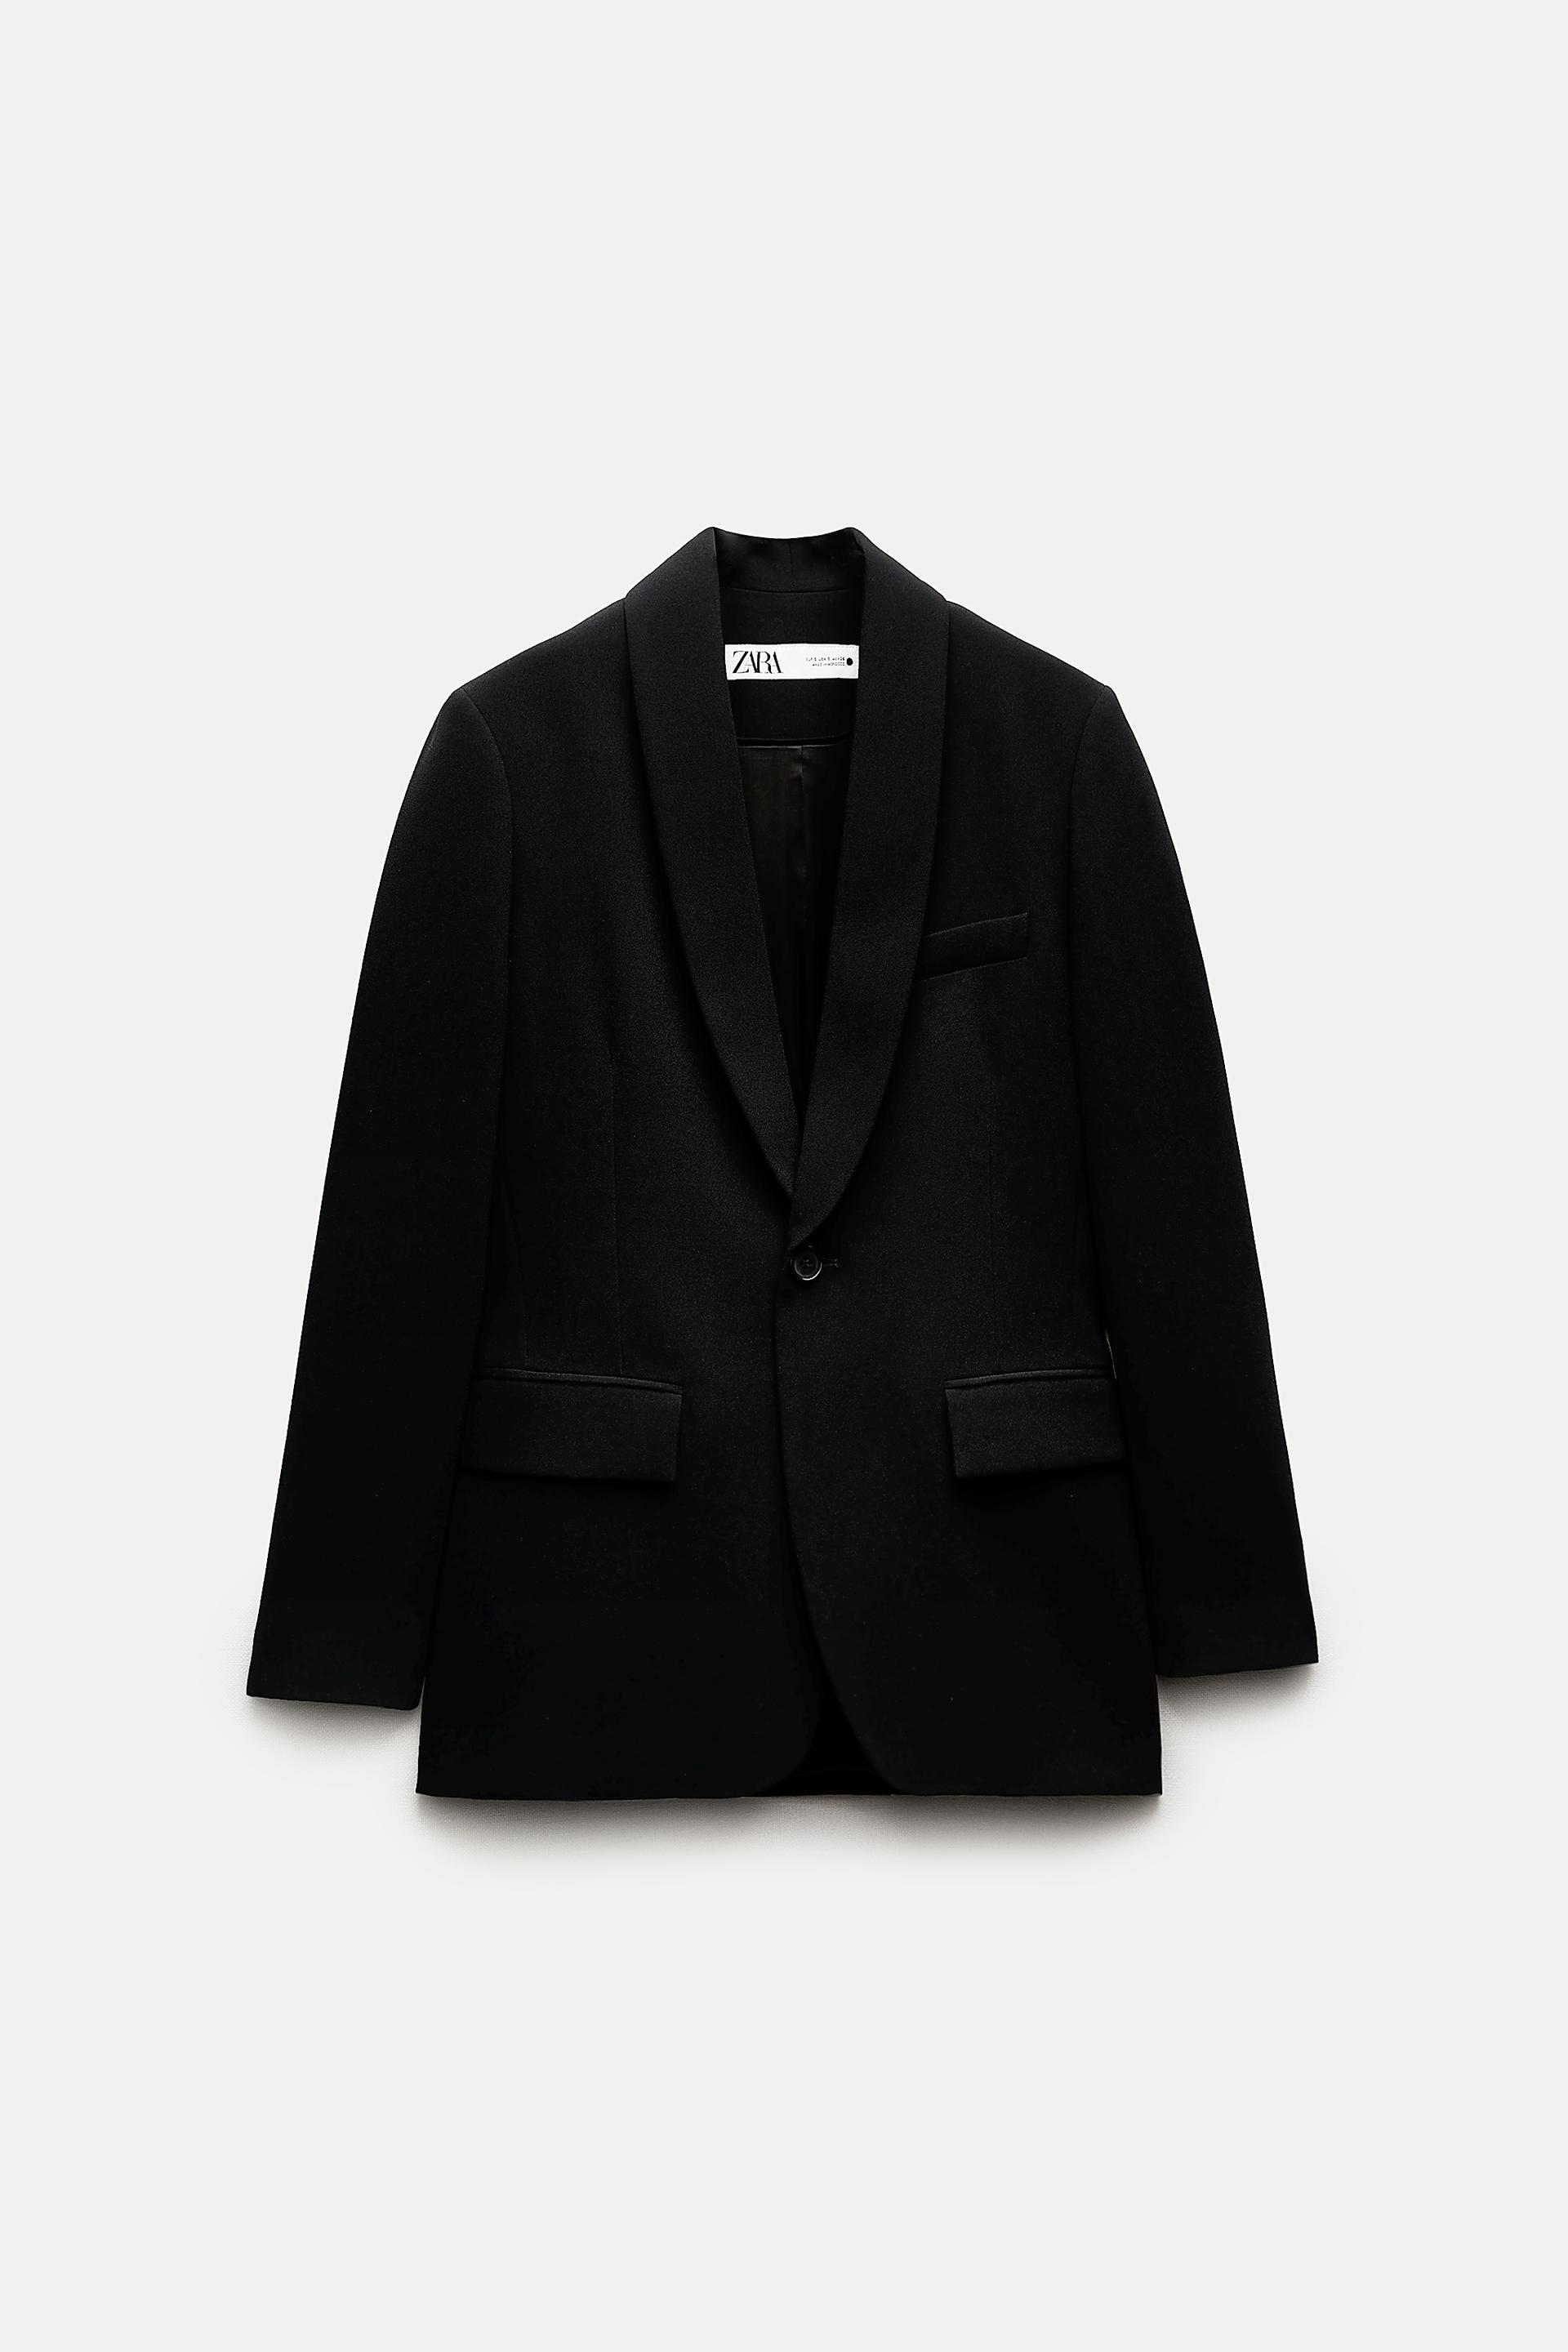 NYC store - 🙊Novedades! Blazer negra con hombreras abullonadas, un  esencial que no puede faltar en tu armario. 📞Pedidos e info 679225742  WhatsApp ➡️Pagos con tarjeta, Bizum o transferencia. #moda#mujer#blazer  #chicas